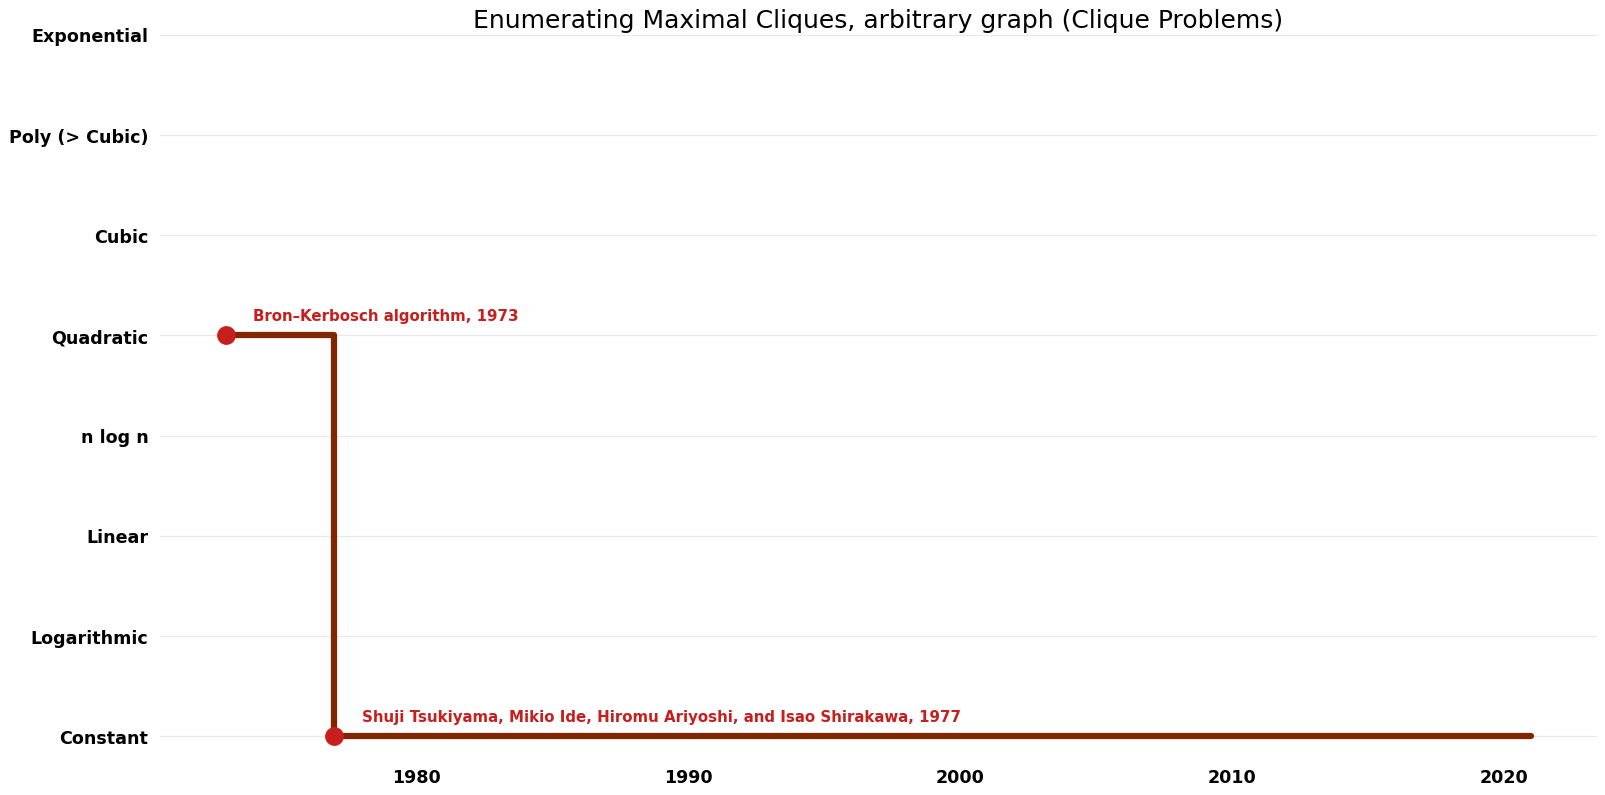 Clique Problems - Enumerating Maximal Cliques, arbitrary graph - Space.png